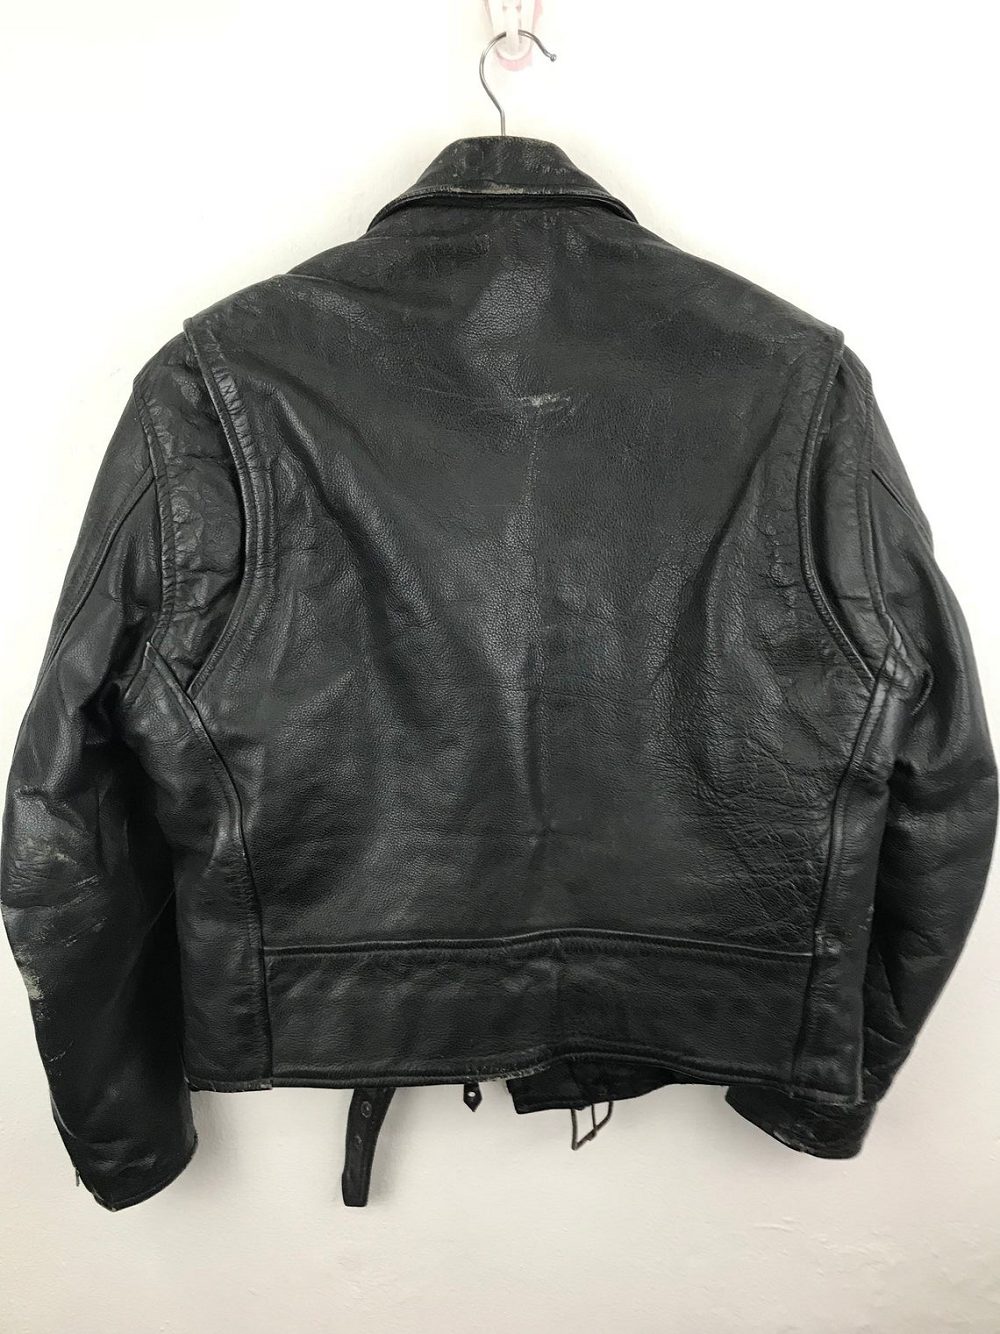 Mens Vanguard Biker Leather Jacket - A2 Jackets